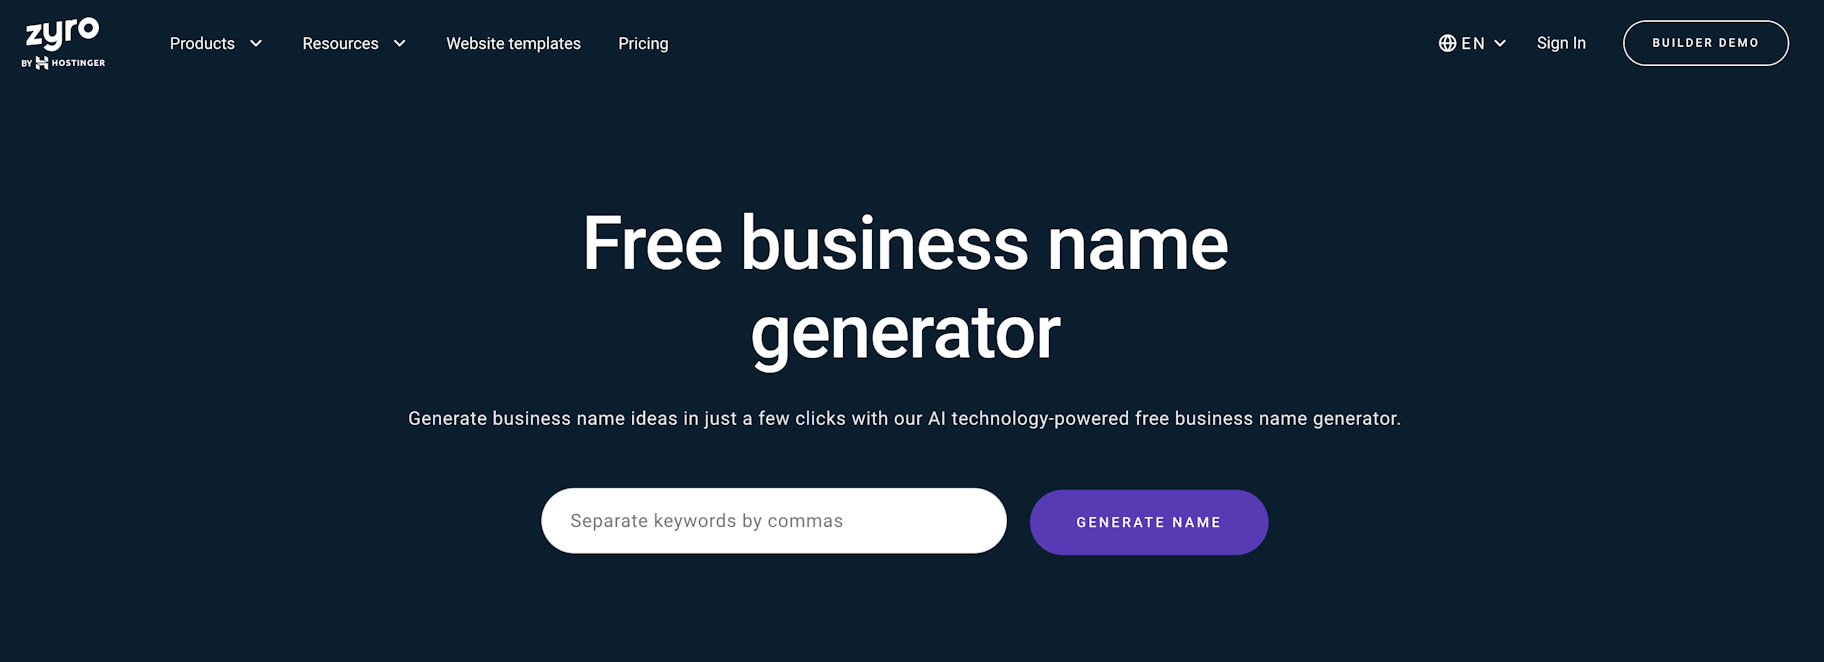 zyro free business name generator